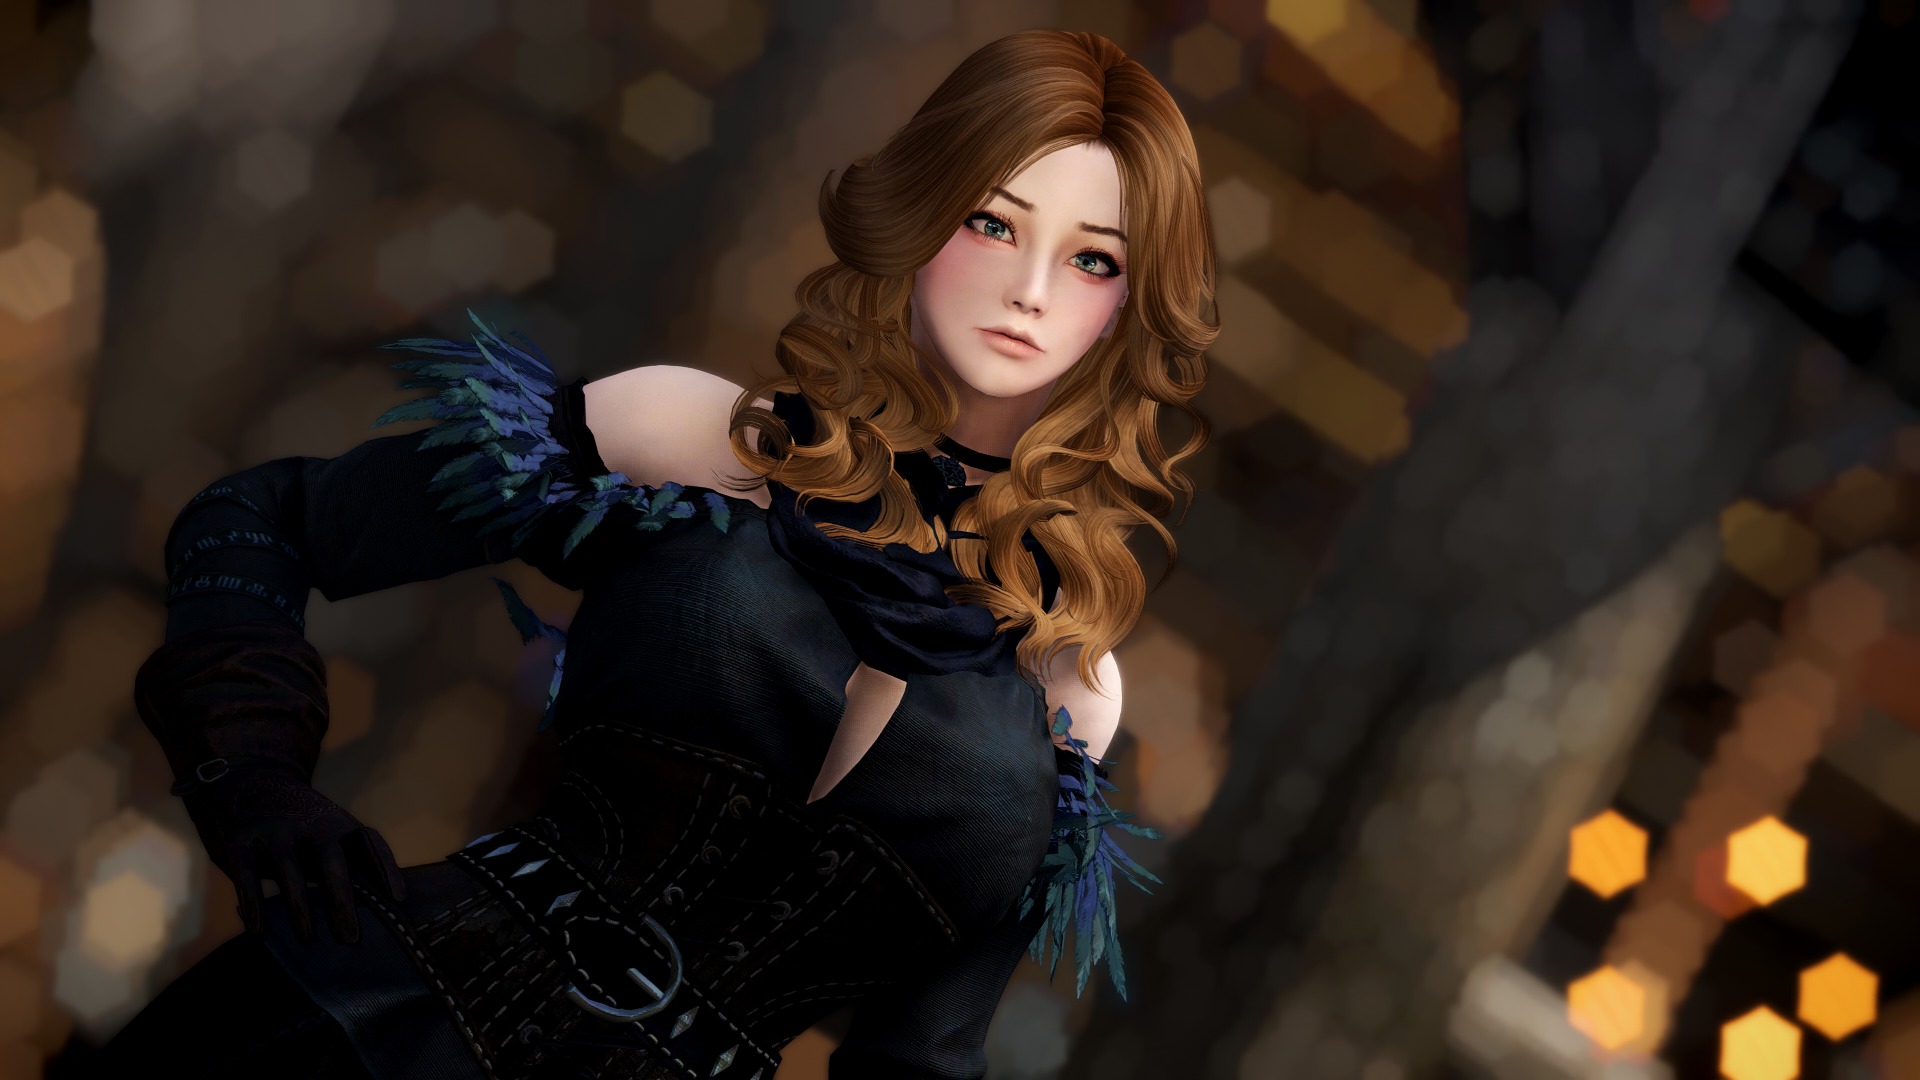 Witcher おすすめmod順 Skyrim Special Edition Mod データベース